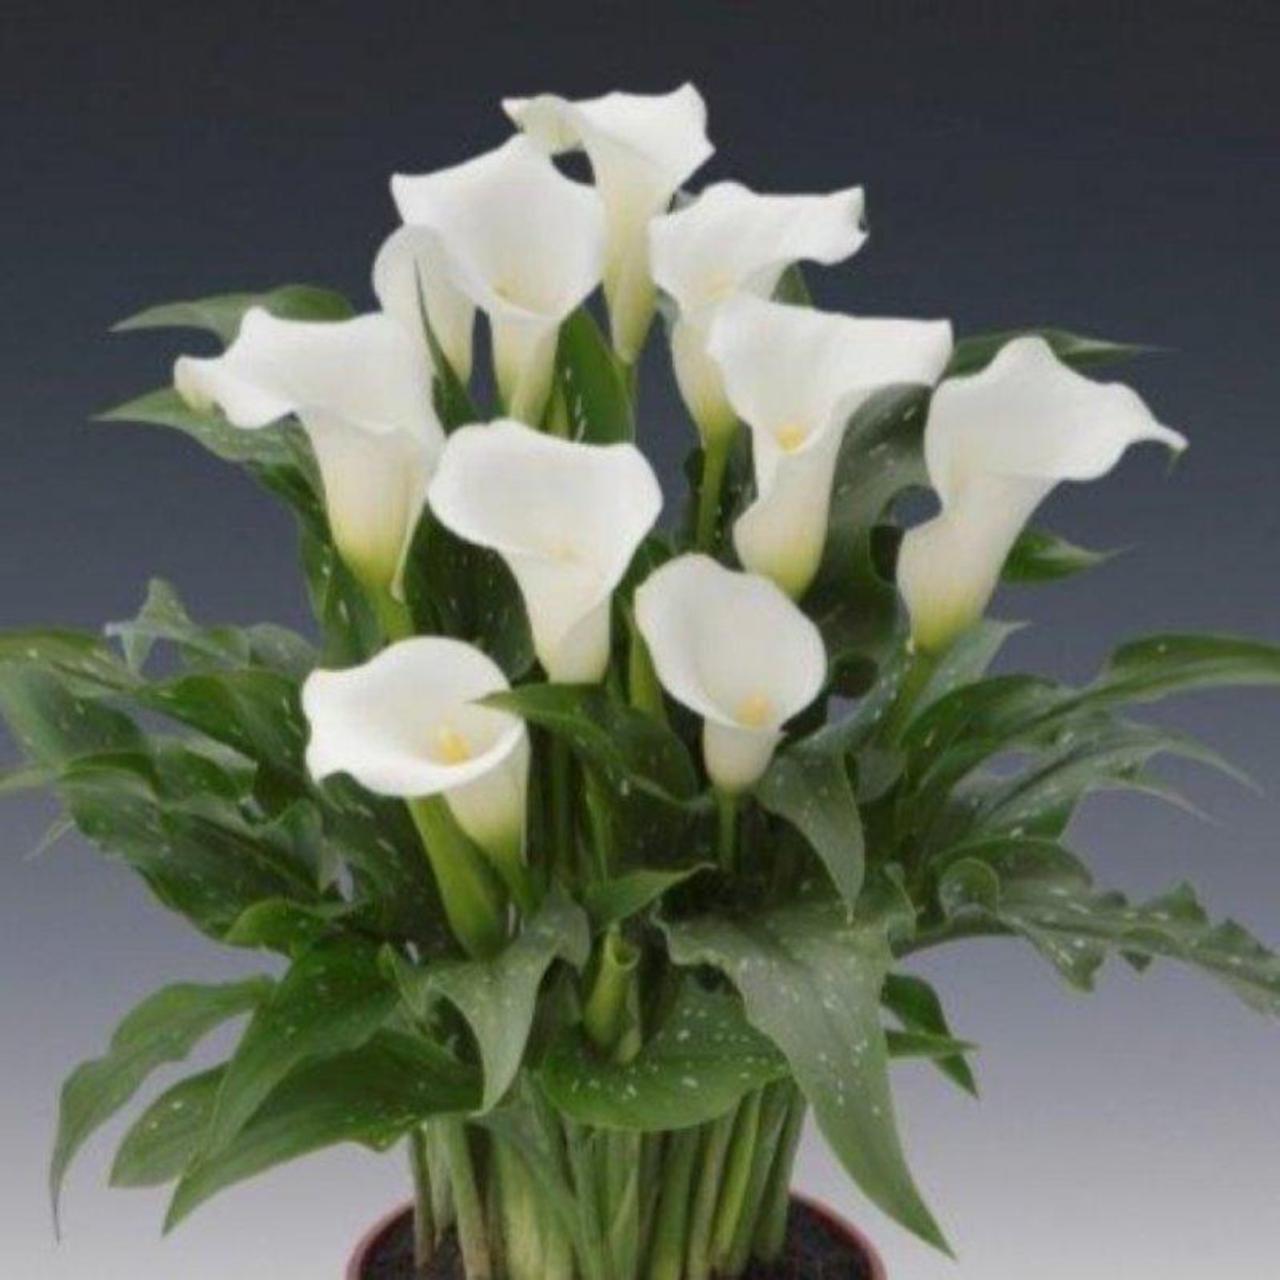 Zantedeschia 'White Art' plant